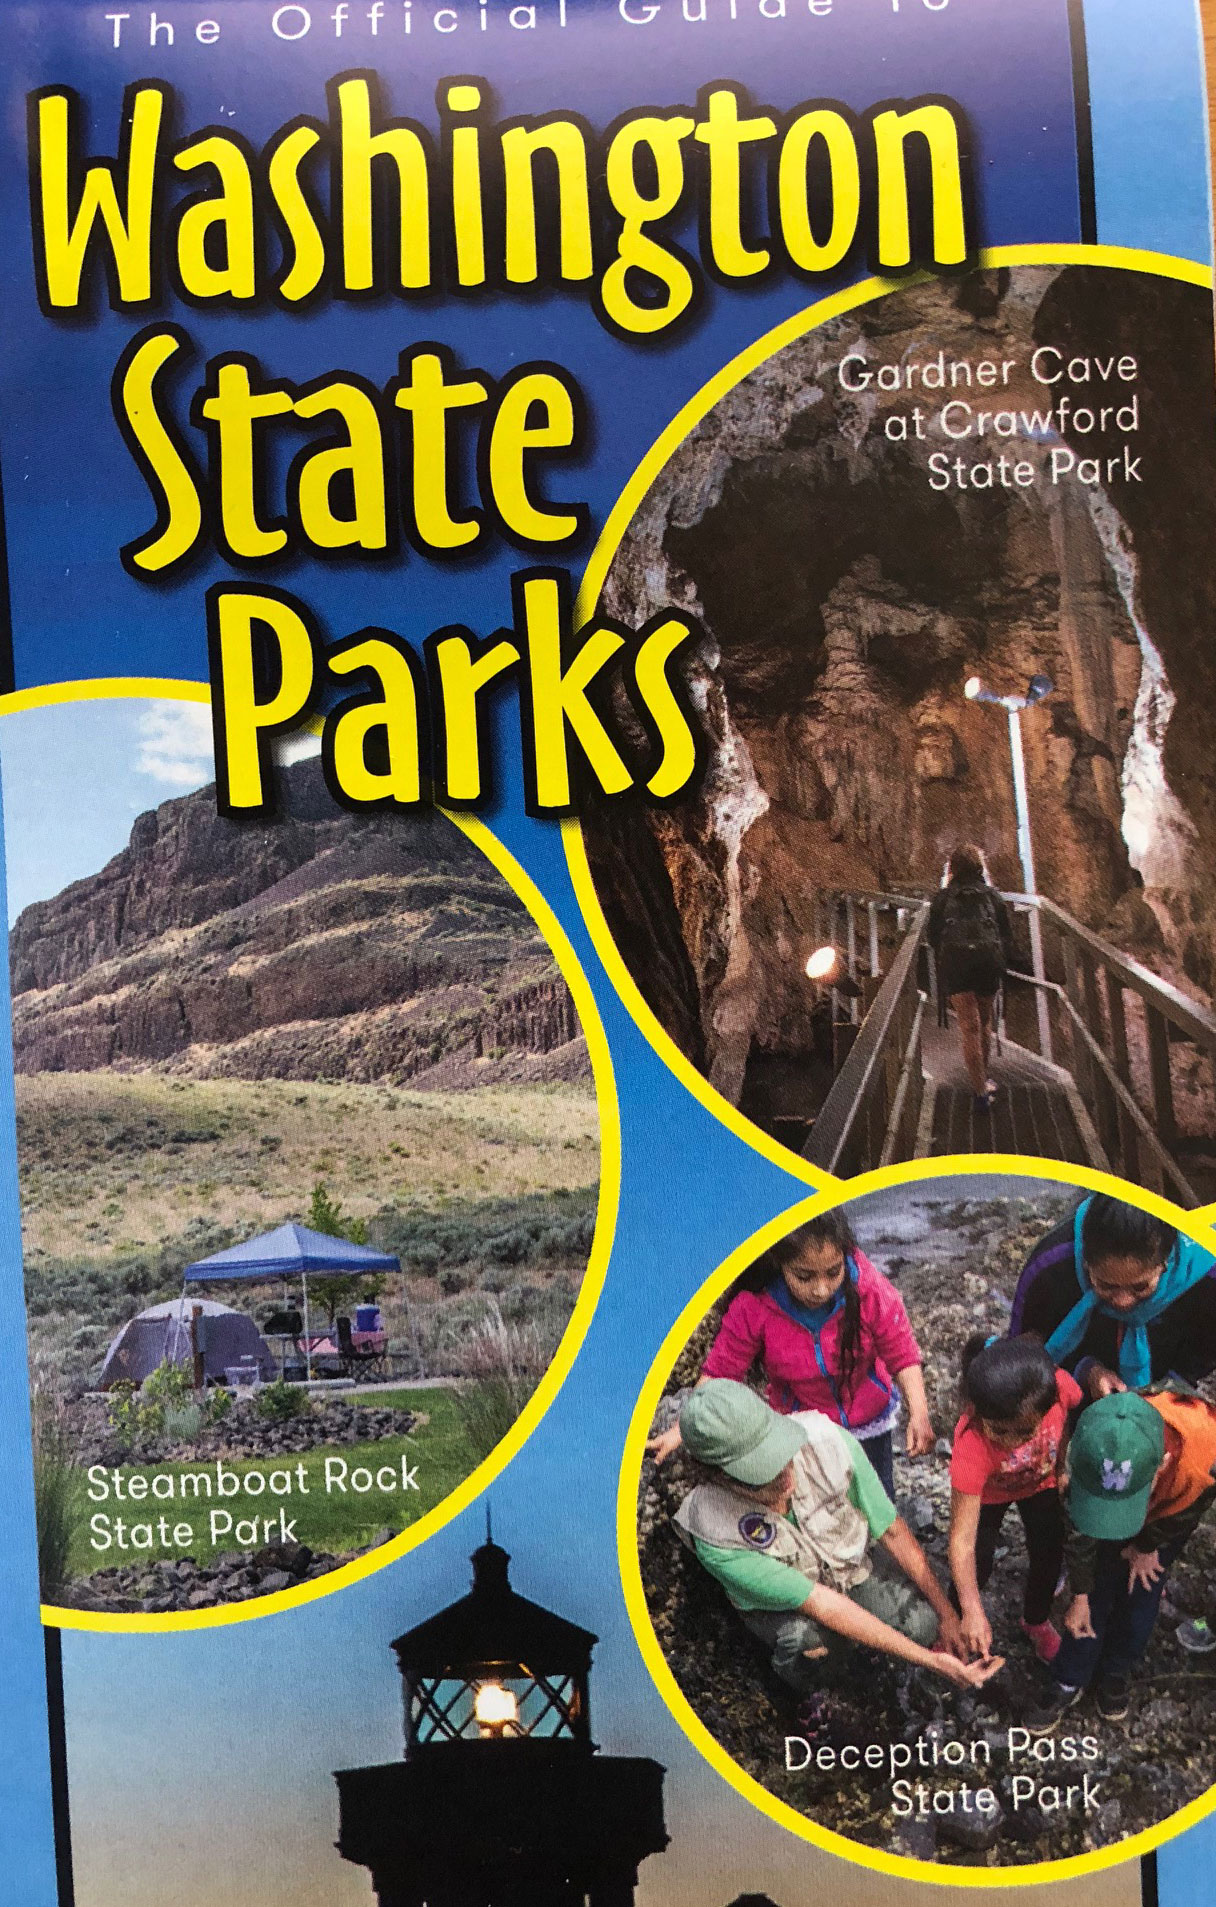 Washington State Parks overhauls reservation system